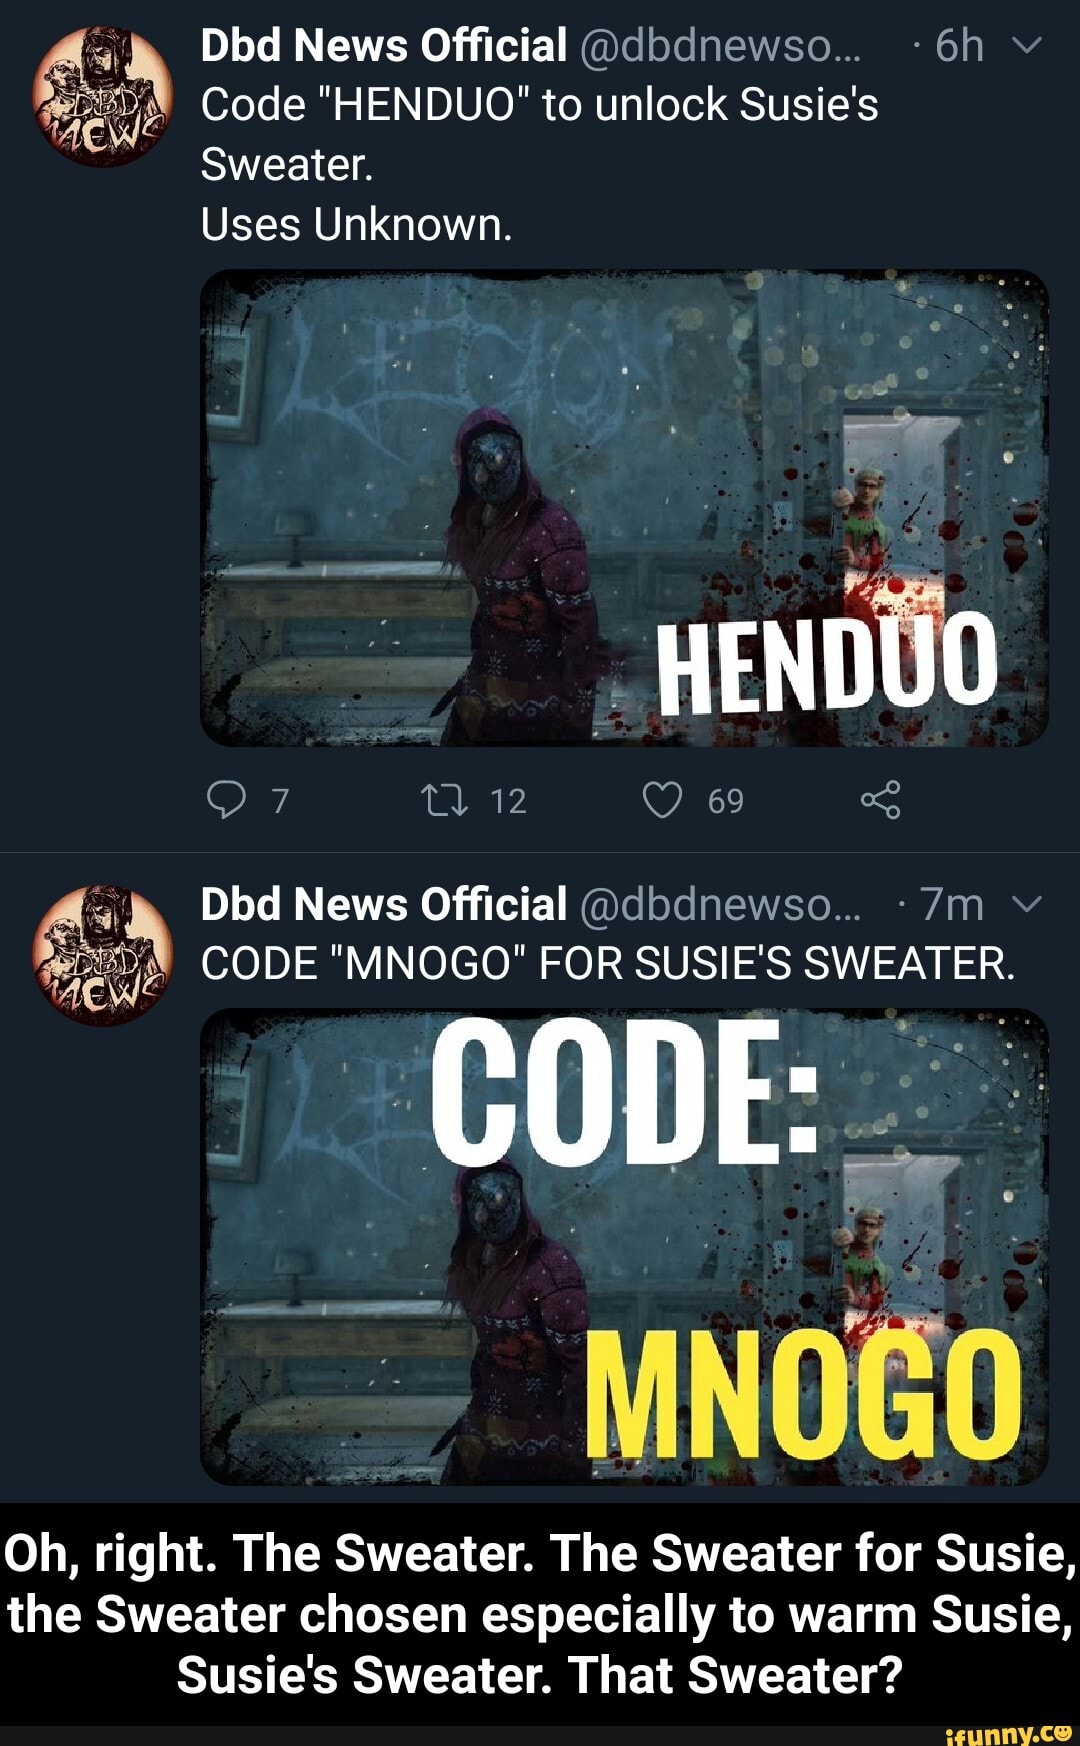 Dbd News Official Code Henduo To Unlock Susie S Sweater Uses Unknown Henduo 69 12 Dbd News